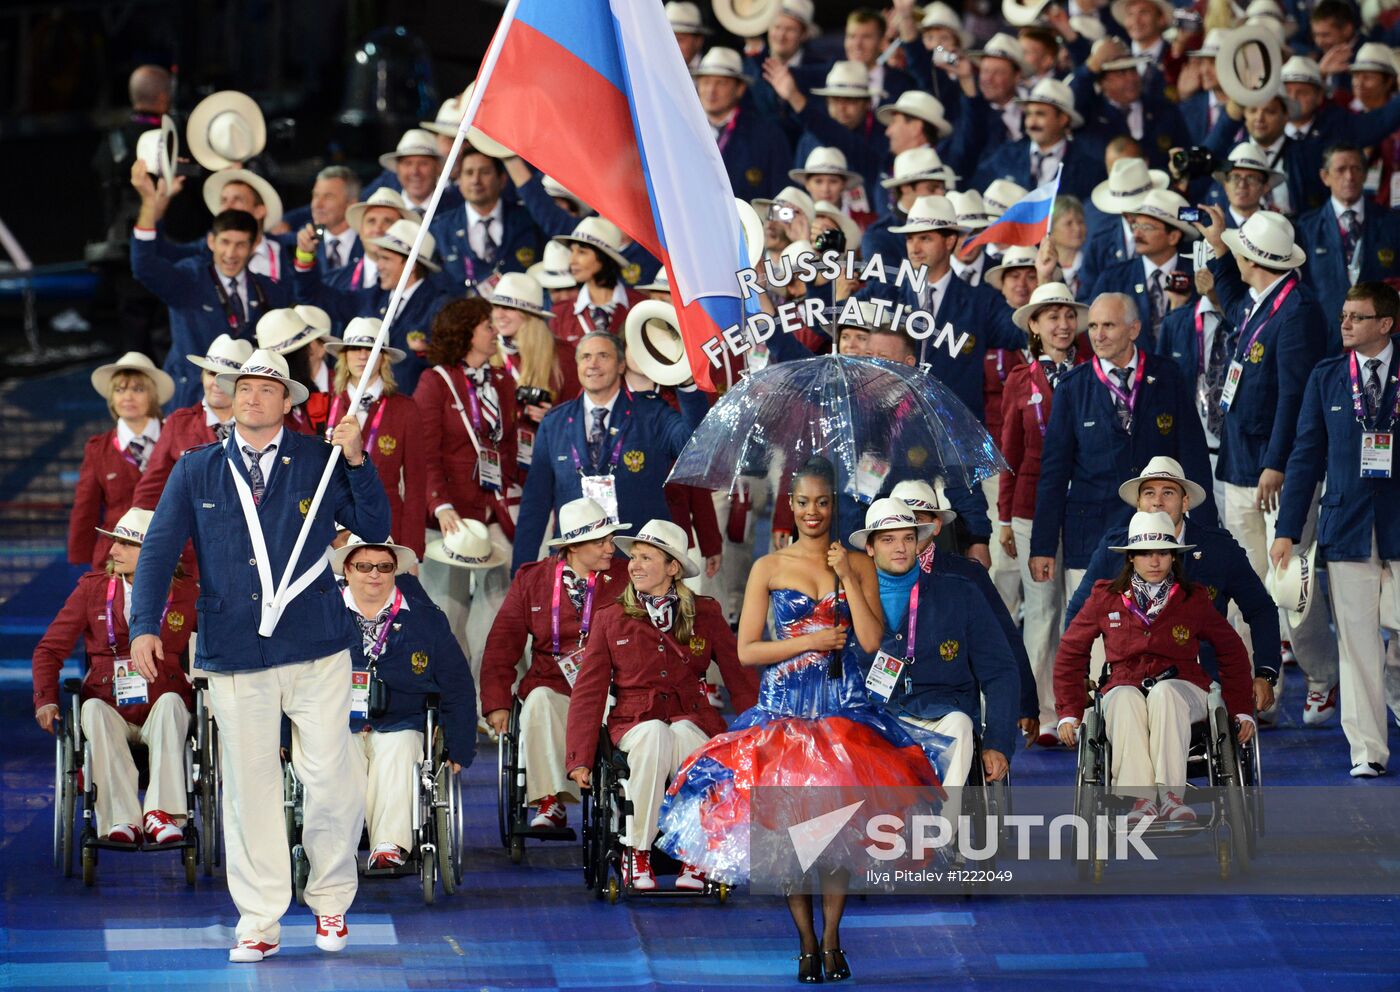 2012 Paralympics opening ceremony